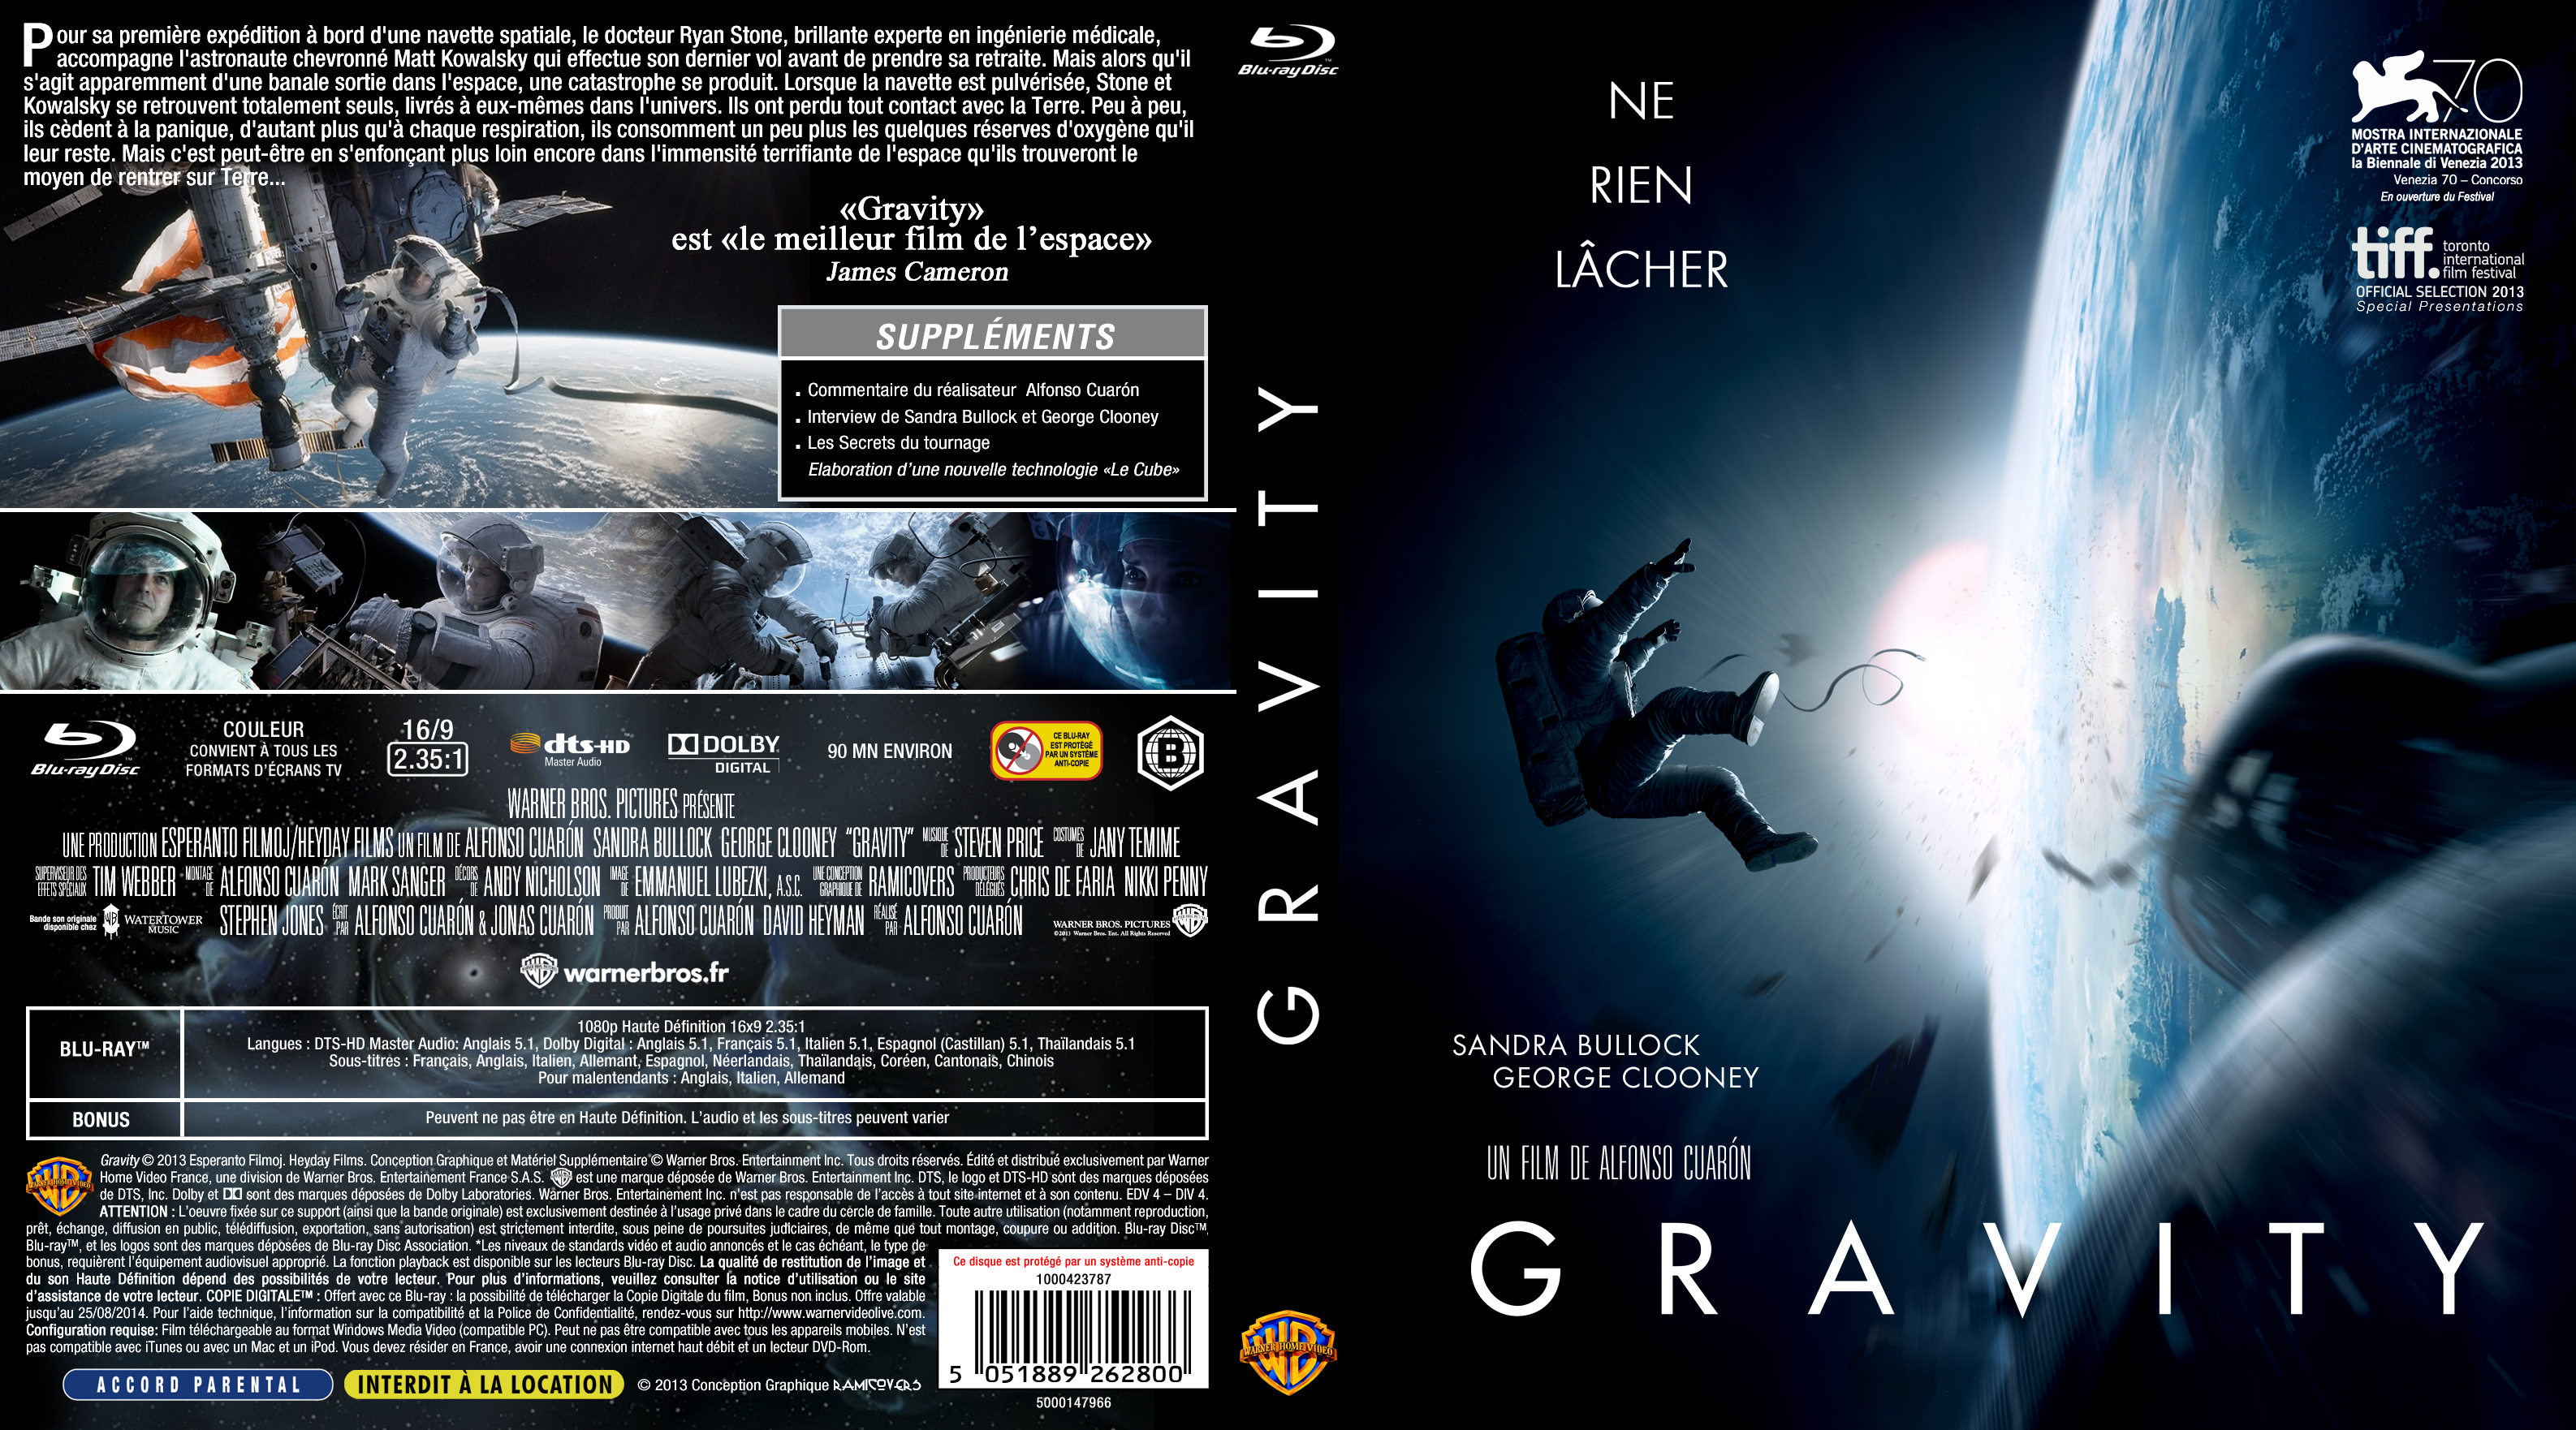 Jaquette DVD Gravity custom (BLU-RAY)